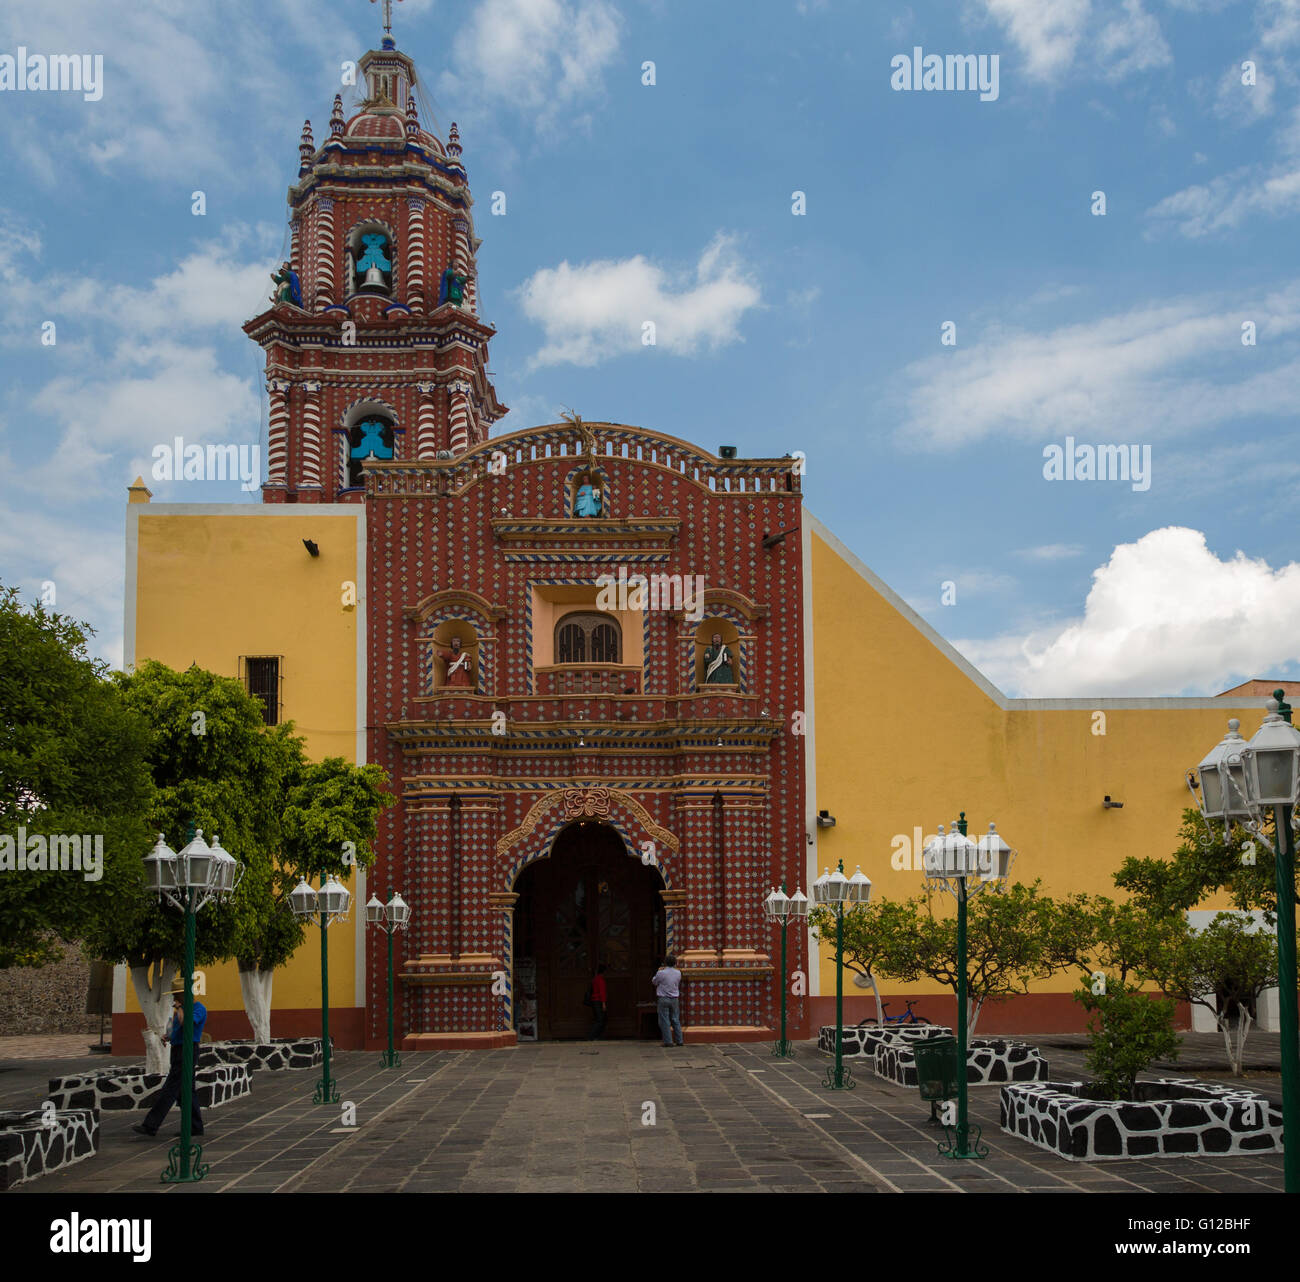 Santa maria tonantzintla church hi-res stock photography and images - Alamy